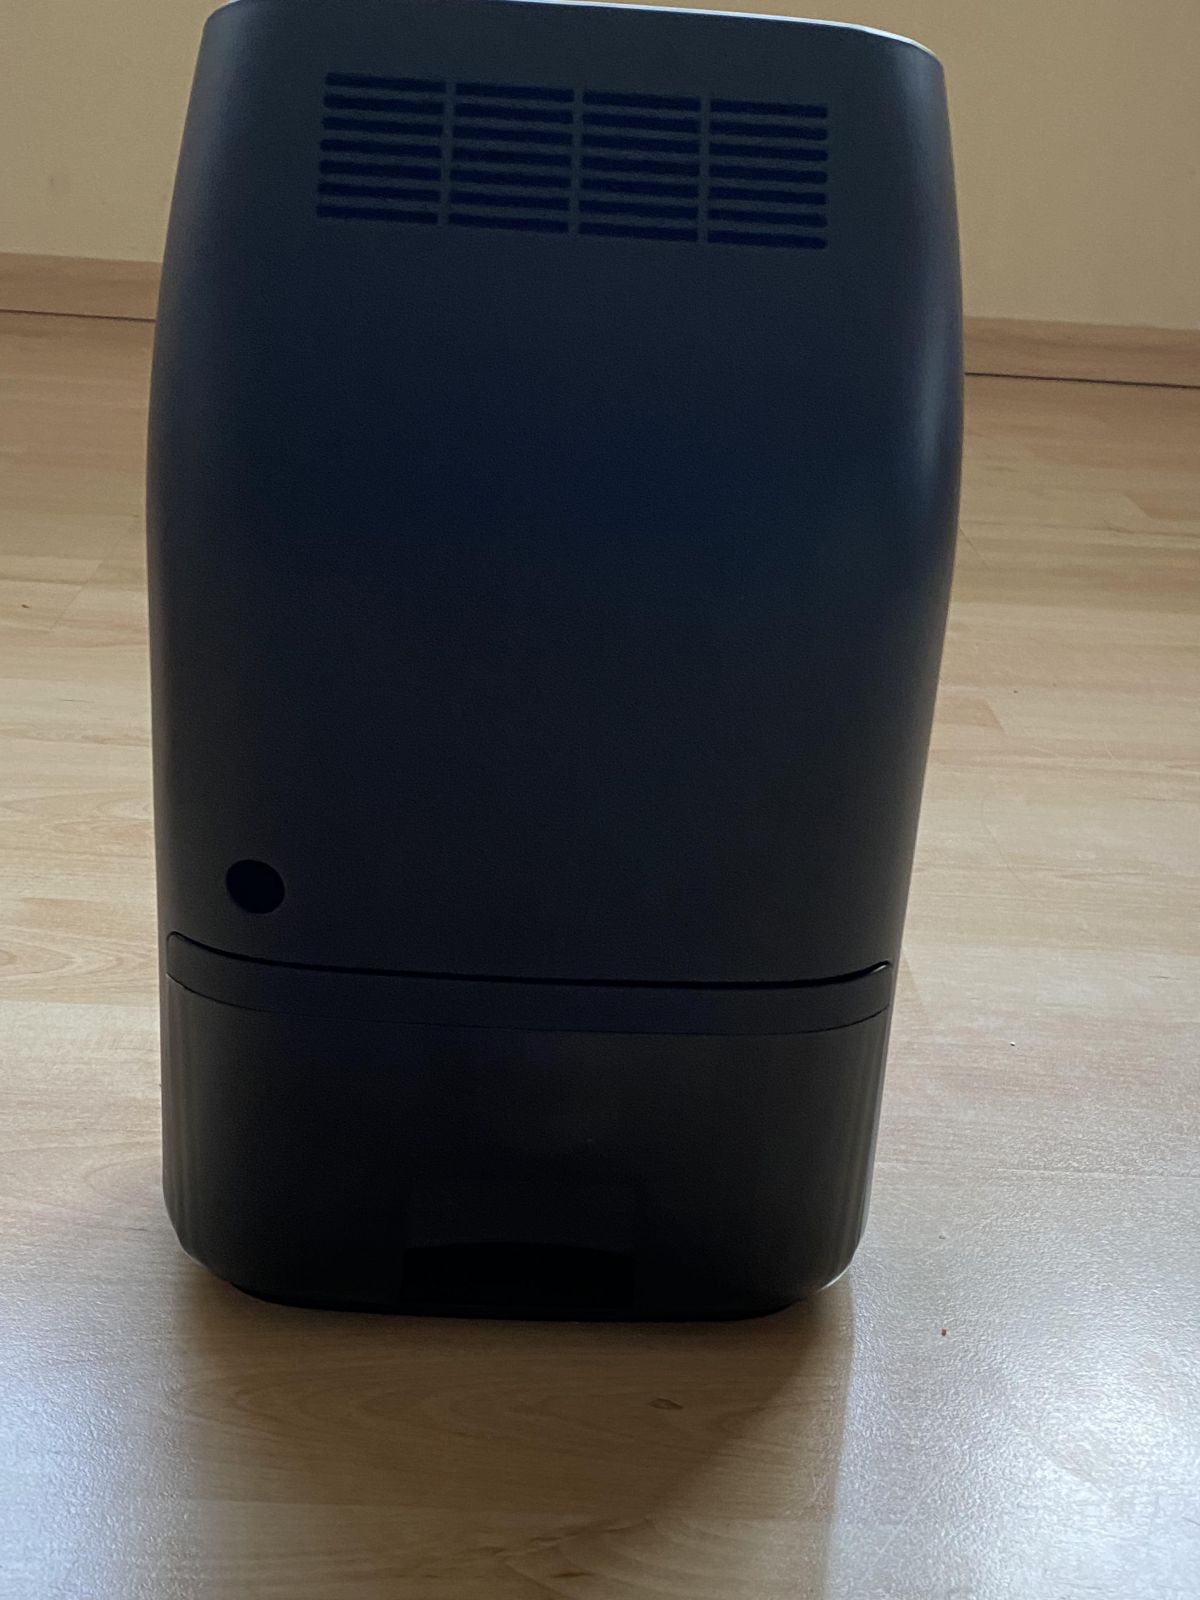 Hysure Electric Dehumidifier, 700 ml